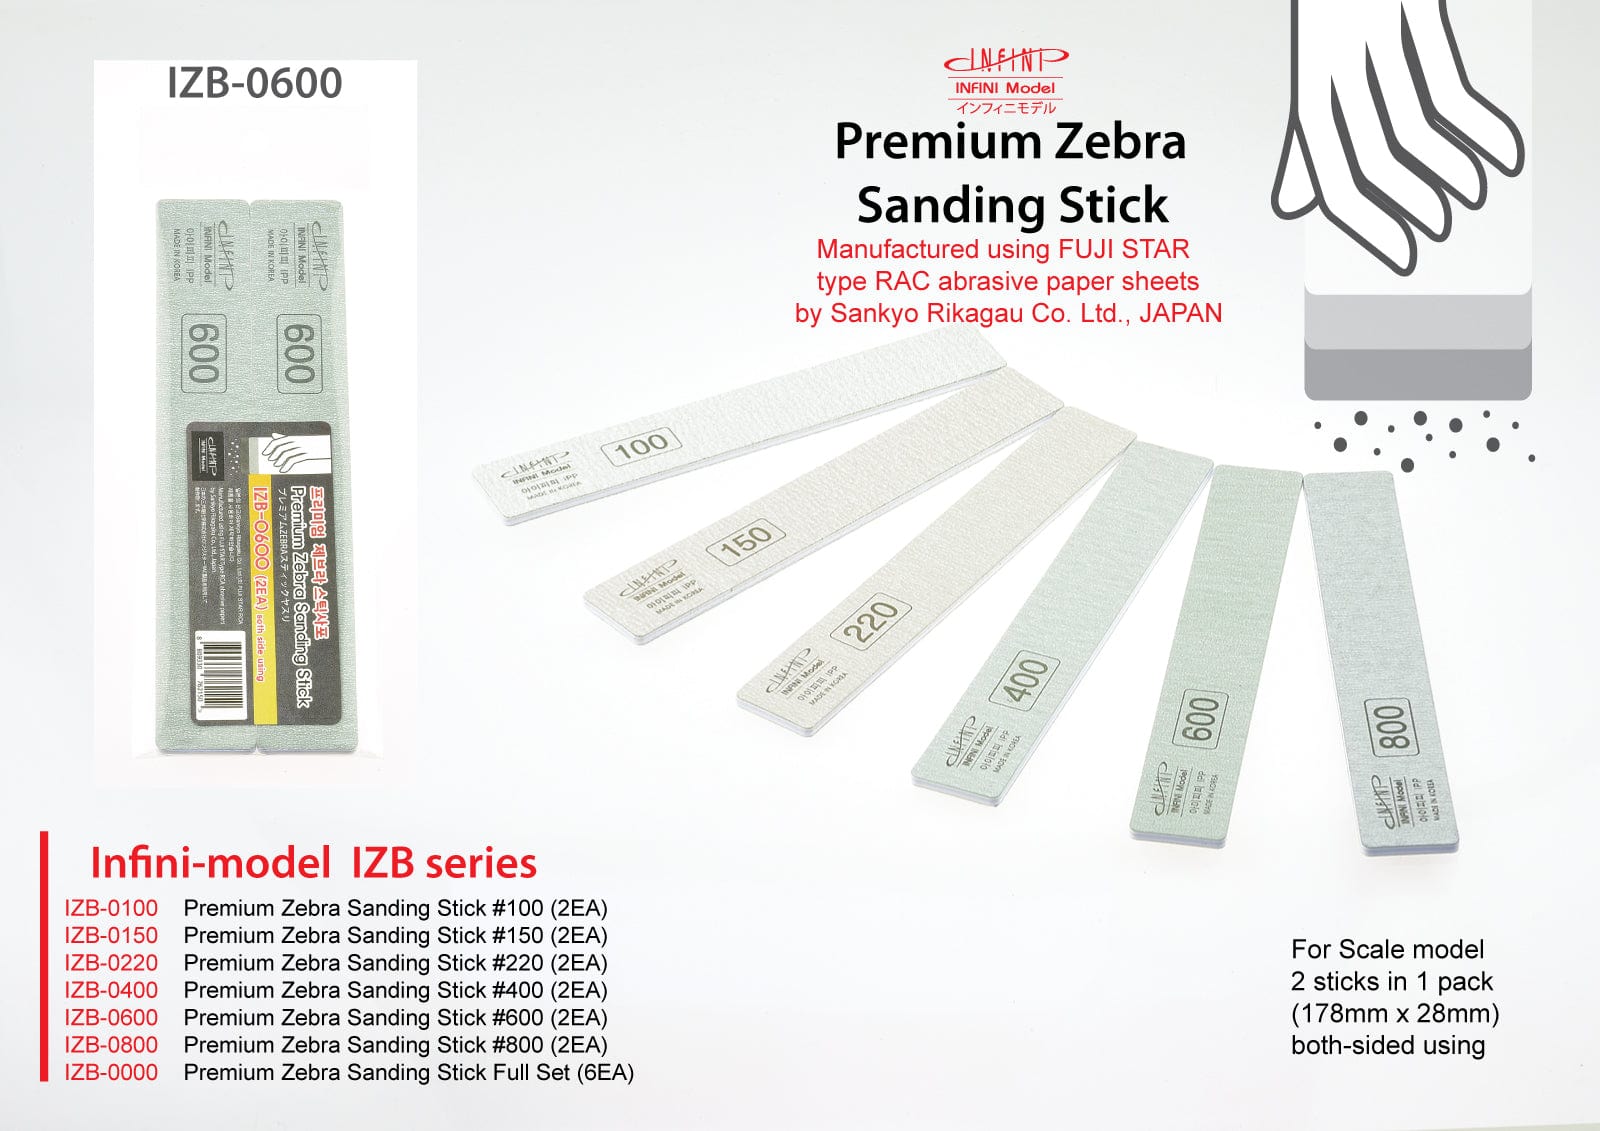 Infini Model Scale Model Accessories 600 Grit Infini Model Premium Zebra Sanding Stick (Sankyo)